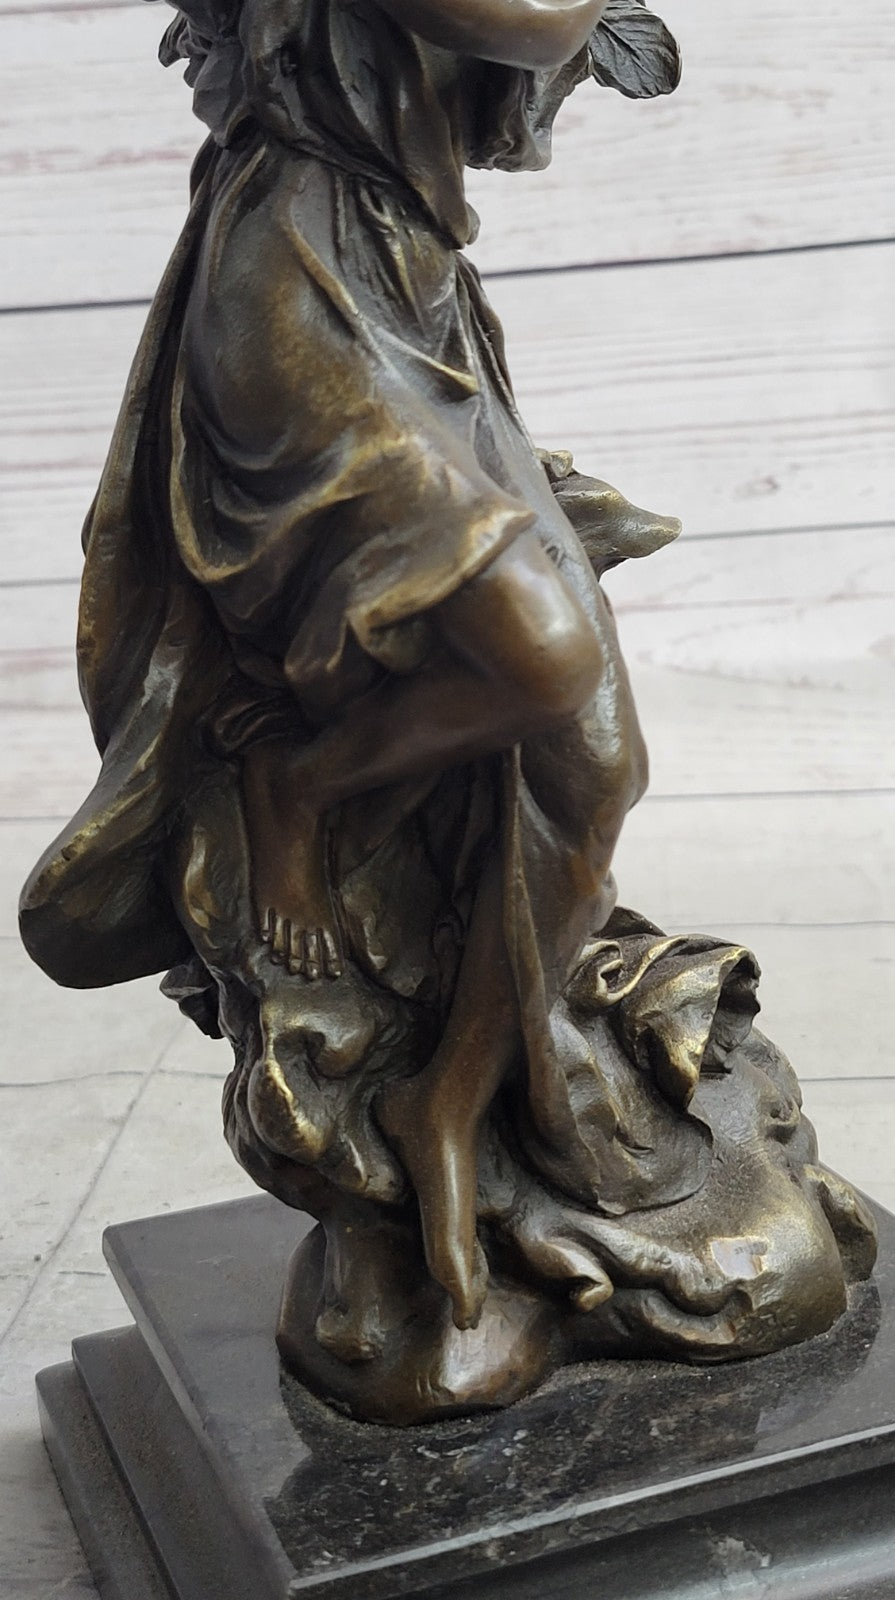 Mythical Greek Goddess of Harvest Bronze Statue, Handmade Sculpture Figurine, Vintage Decor